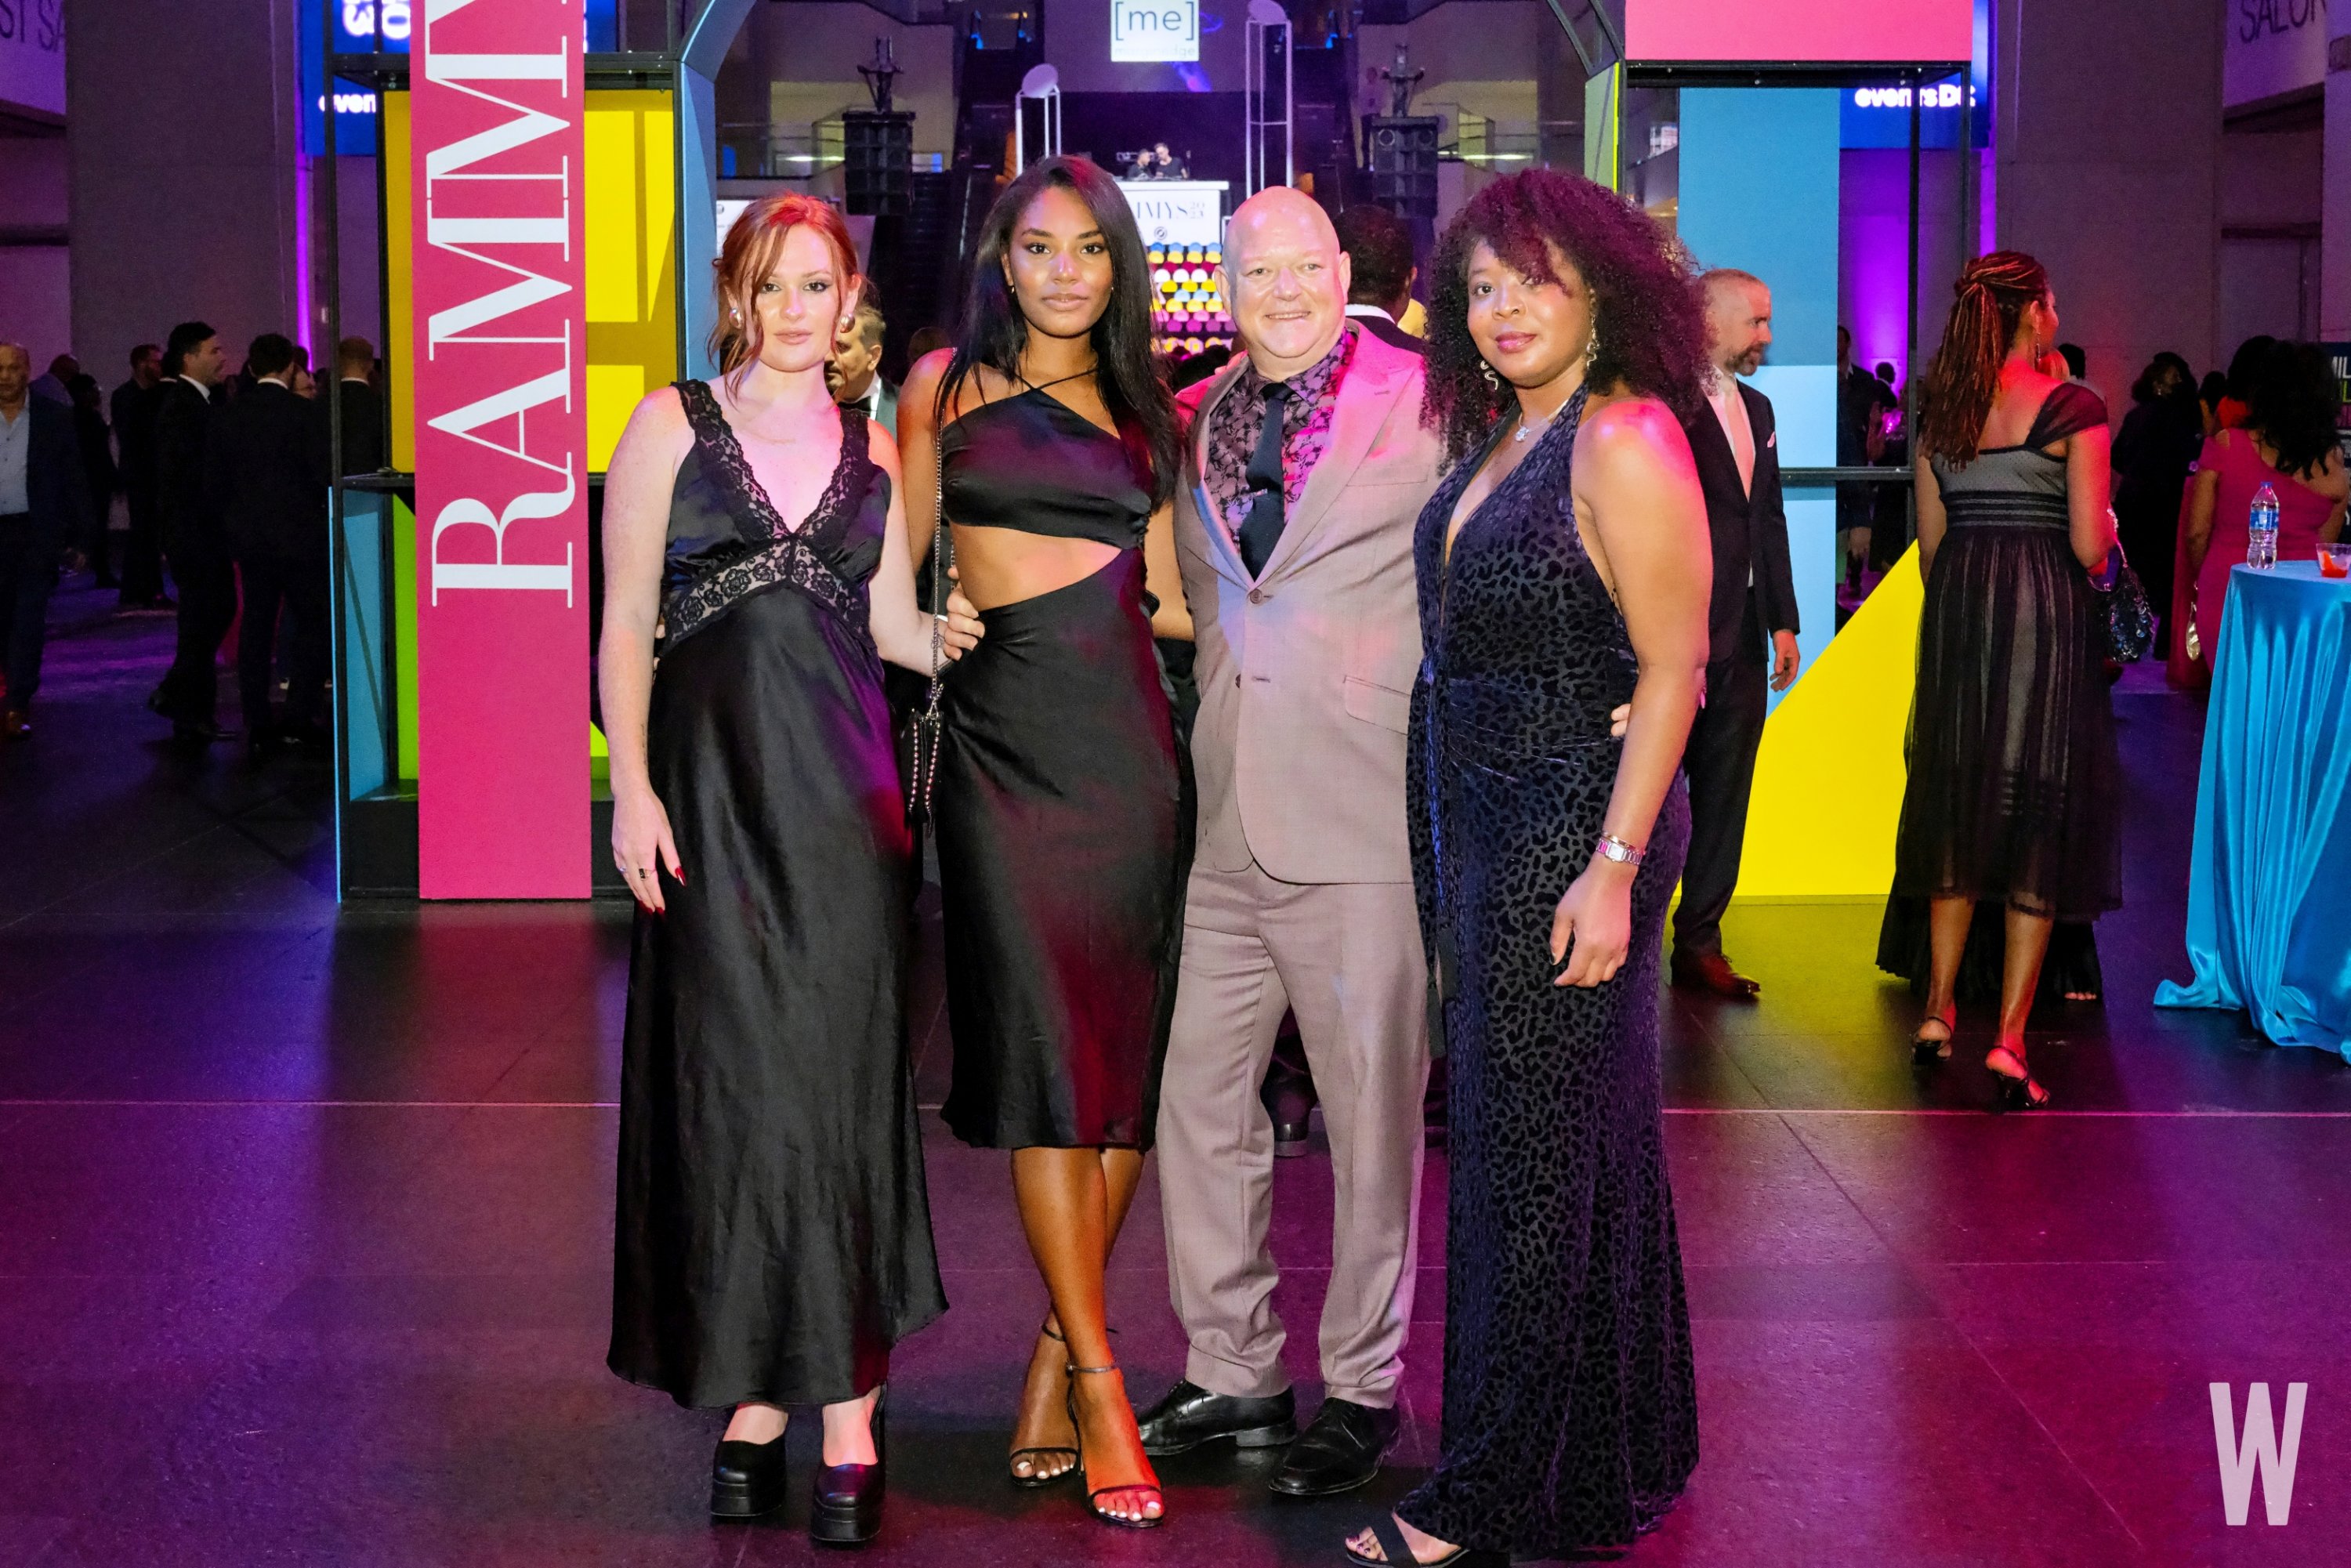 The 2013 RAMMY Awards Gala - WTOP News